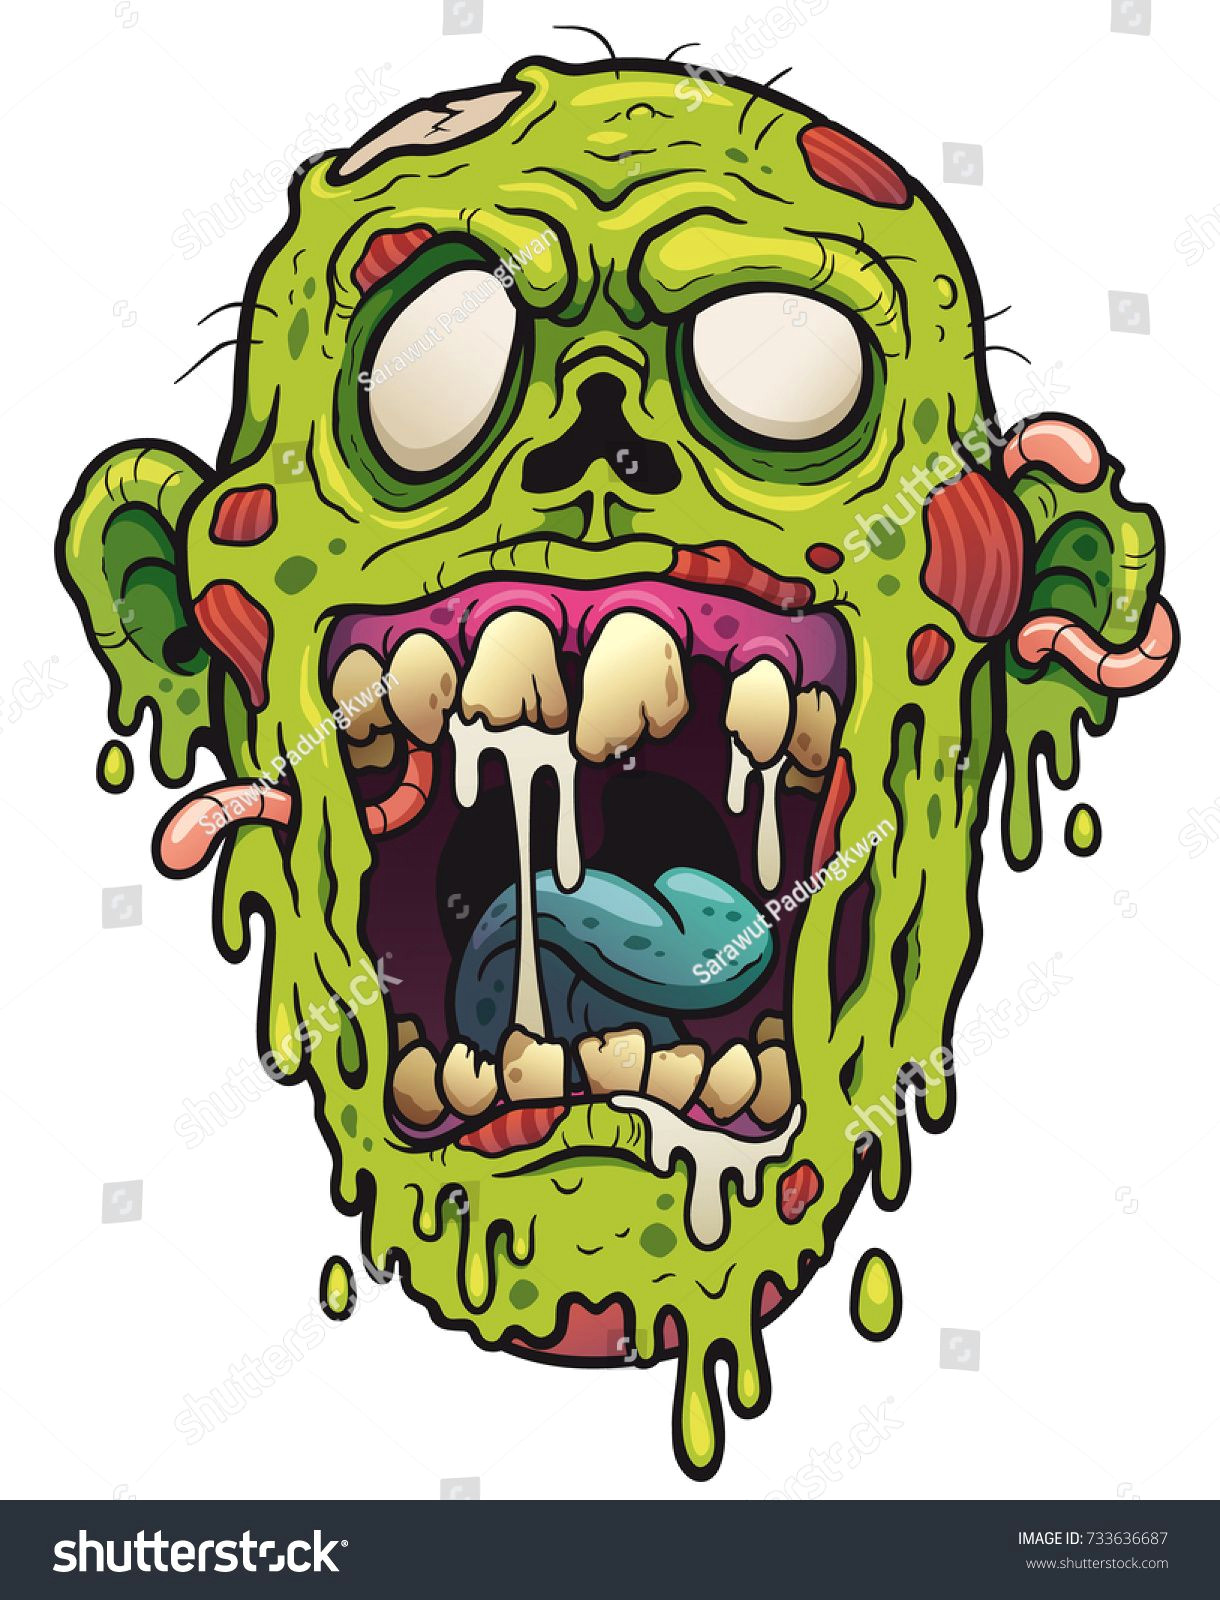 vector illustration of cartoon zombie head